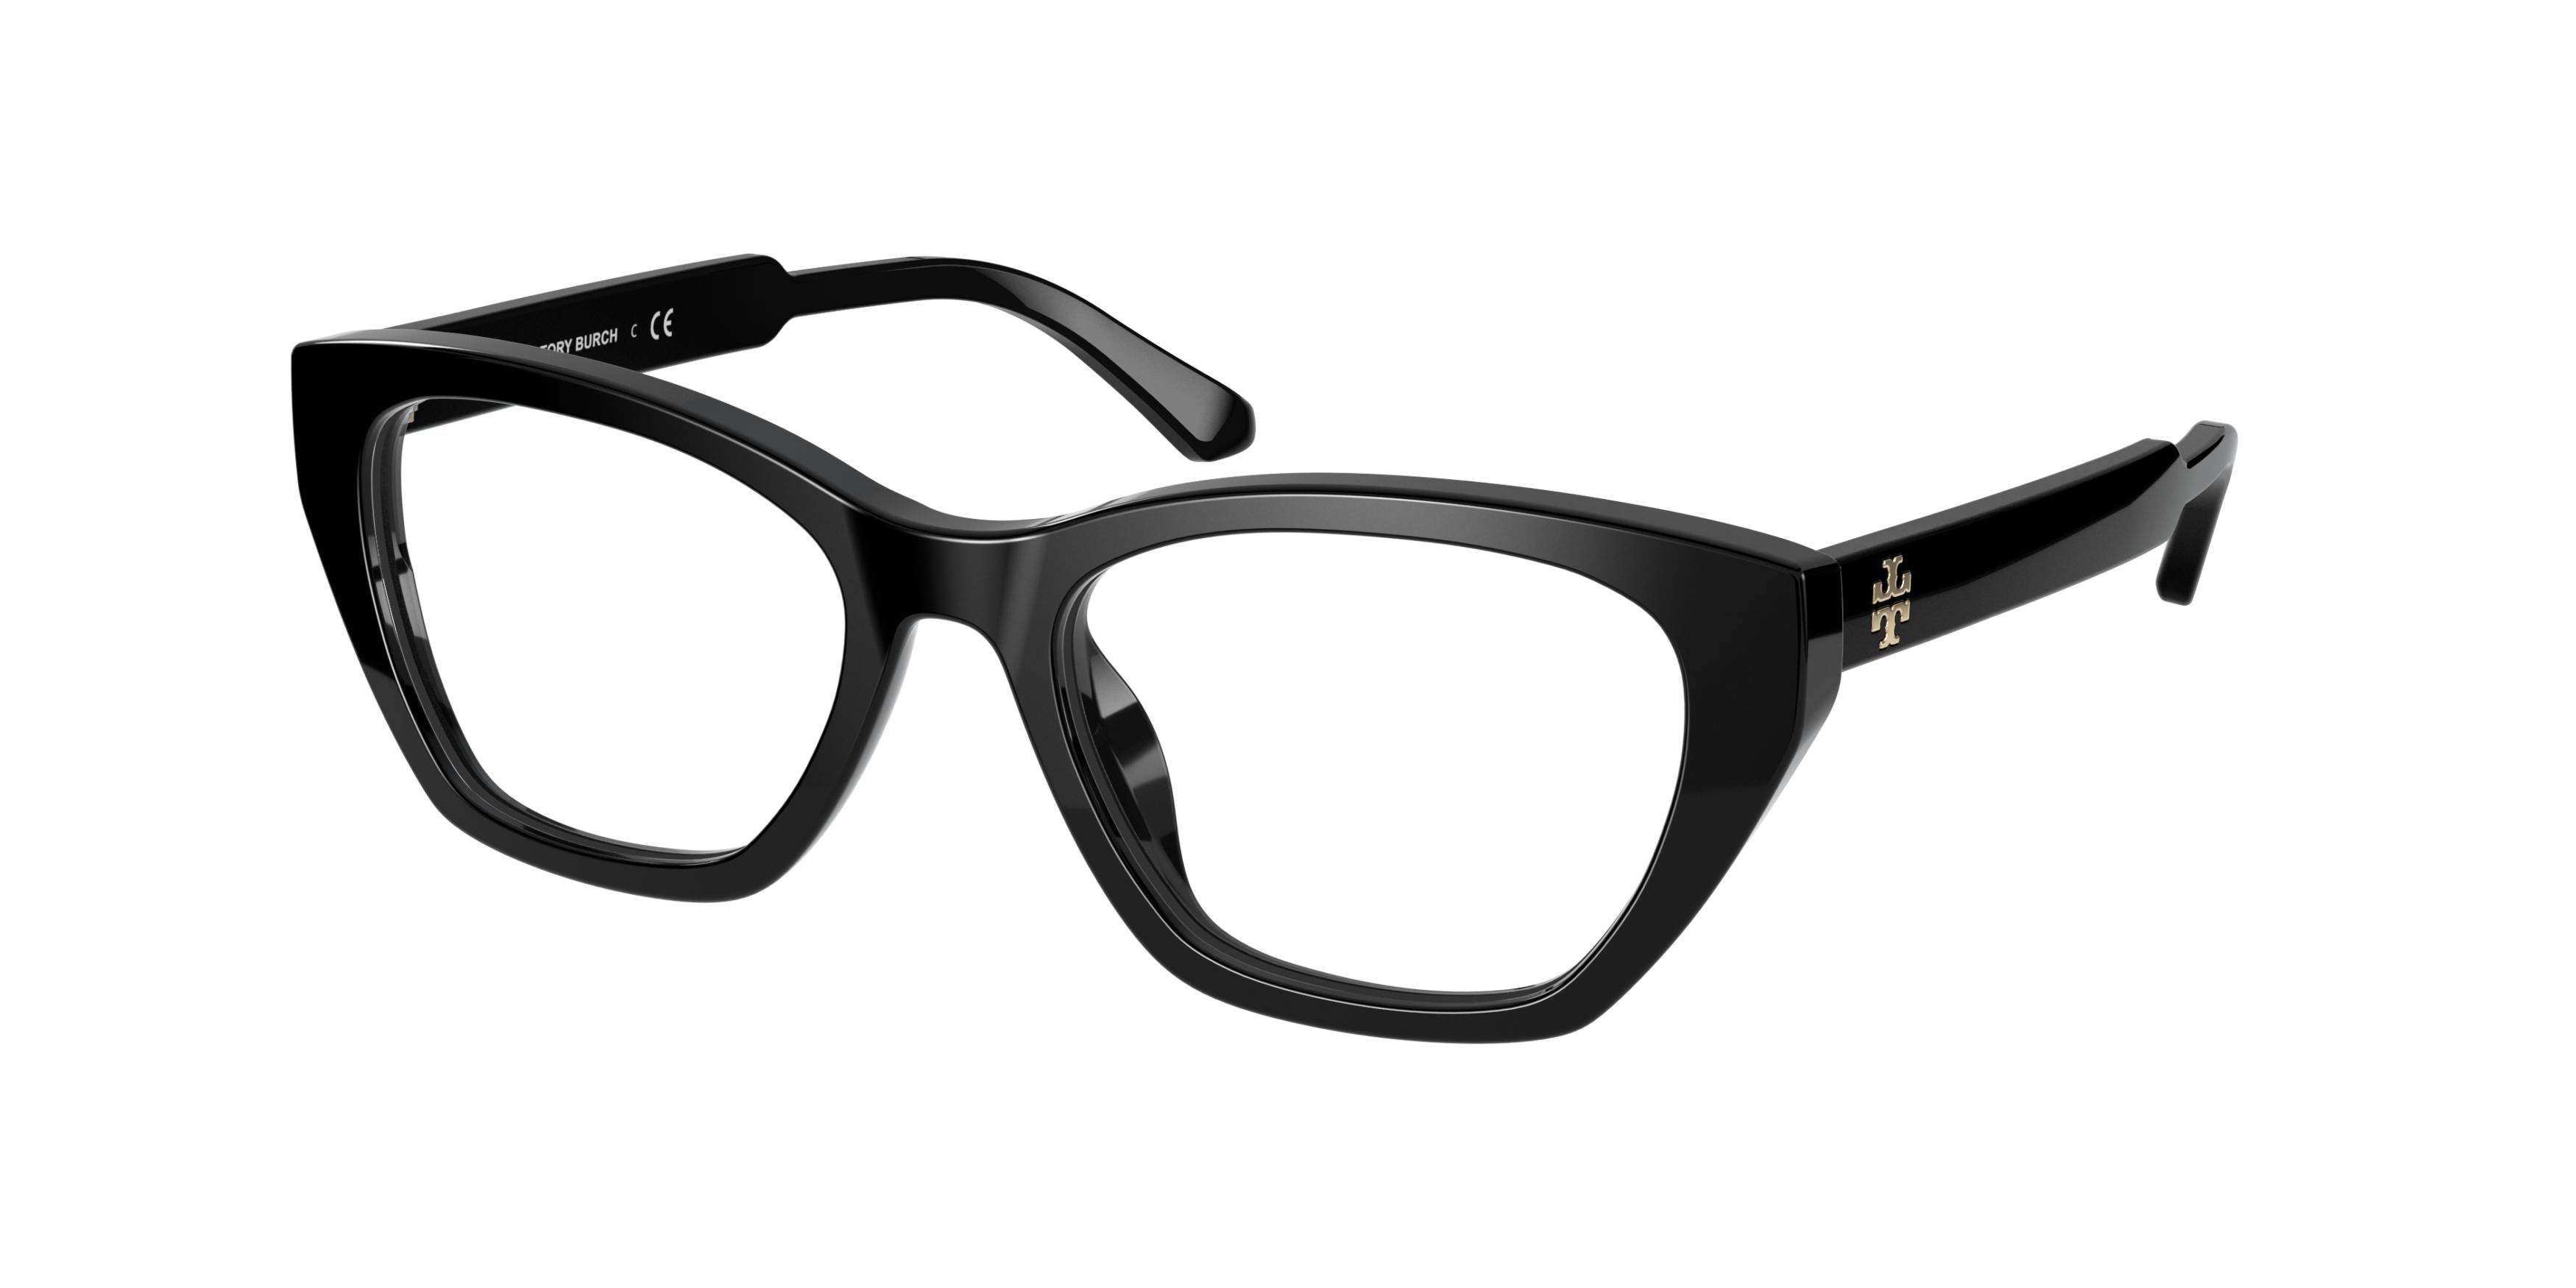 Buy Tory Burch Eyeglasses directly from OpticsFast.com